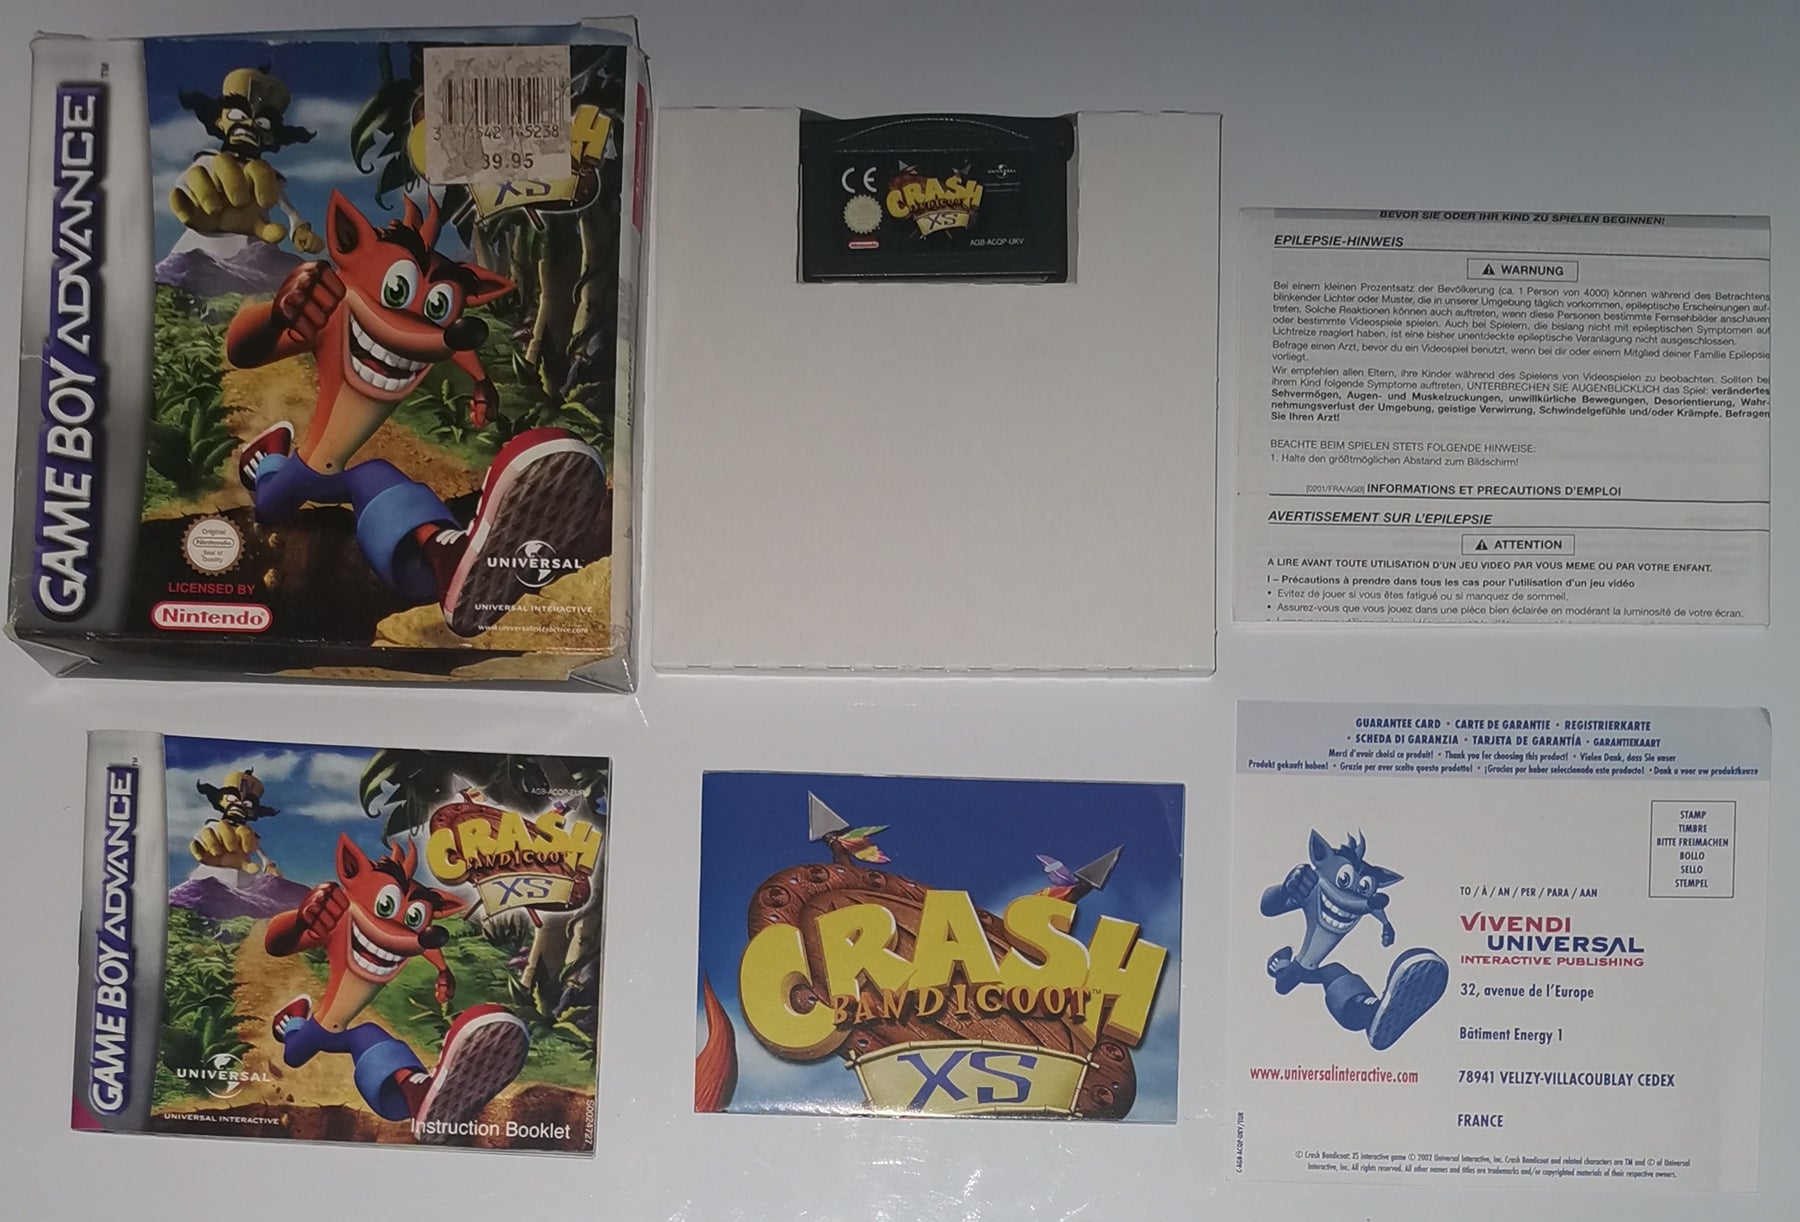 Crash Bandicoot XS (Game Boy Advance) [Gut]